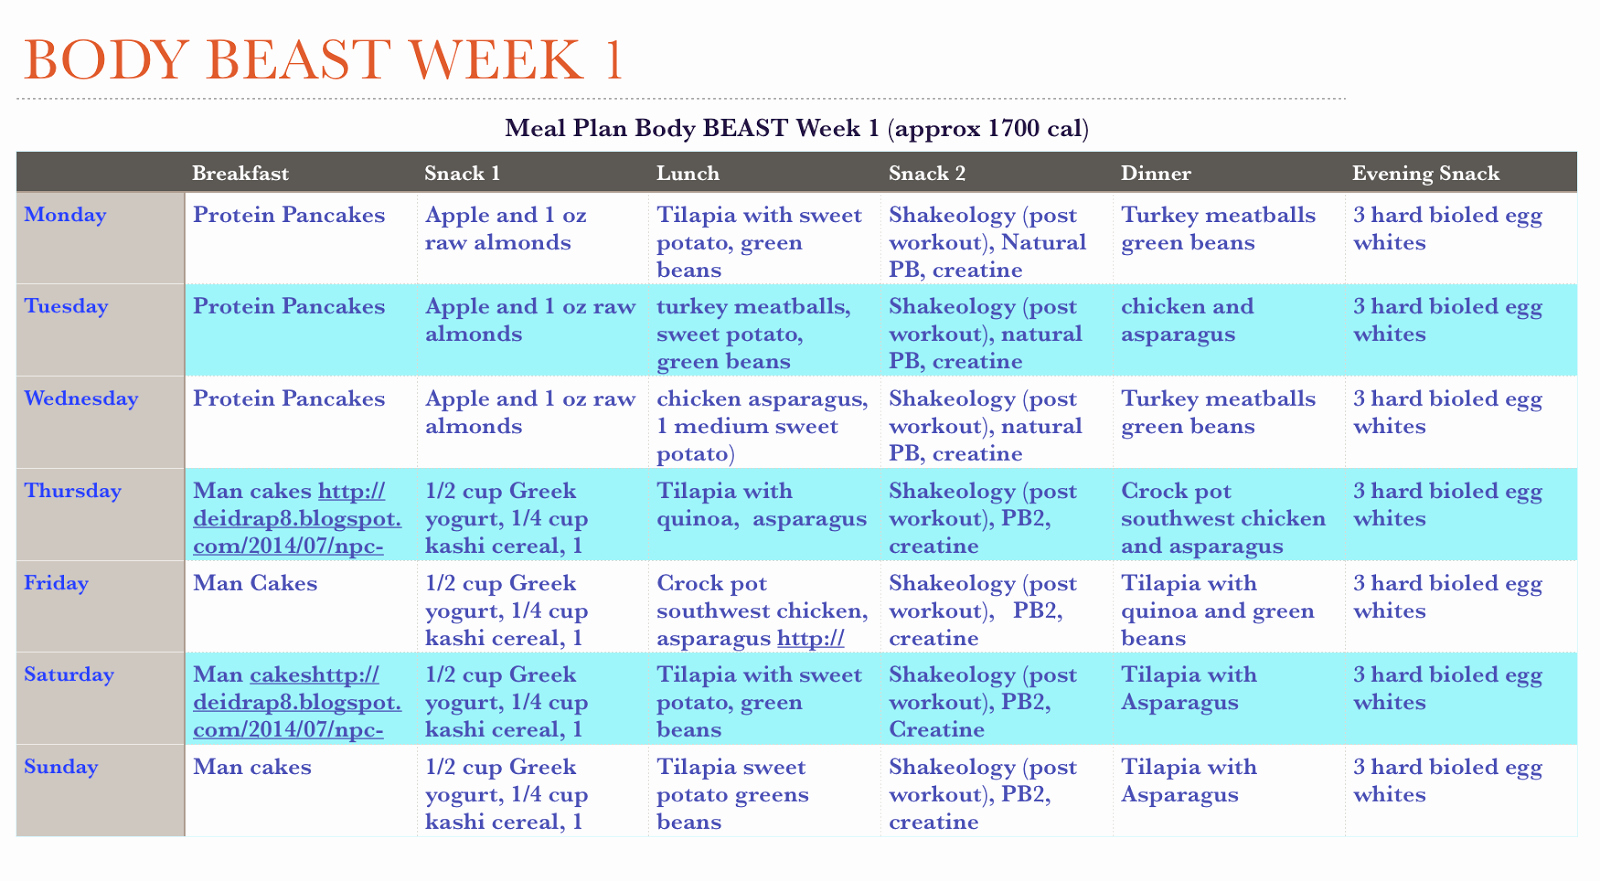 Body Beast Meal Plan Spreadsheet Luxury My Meal Plan for Week 1 Of Body Beast Cleaneating